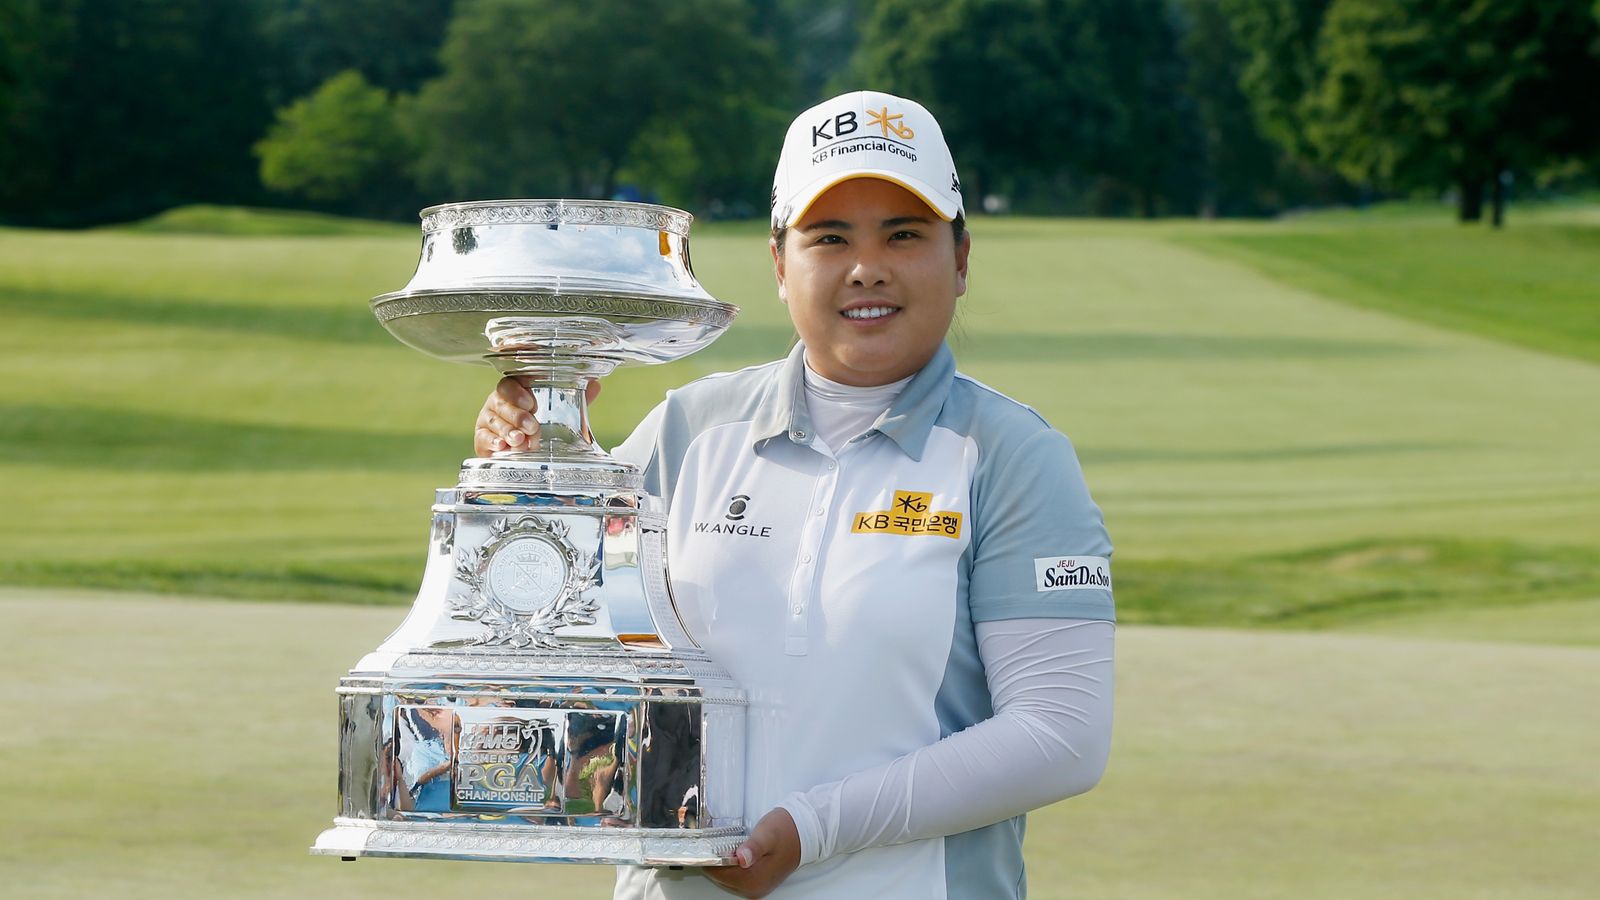 Inbee Park claims third straight win at Women's PGA Championship | Golf ...